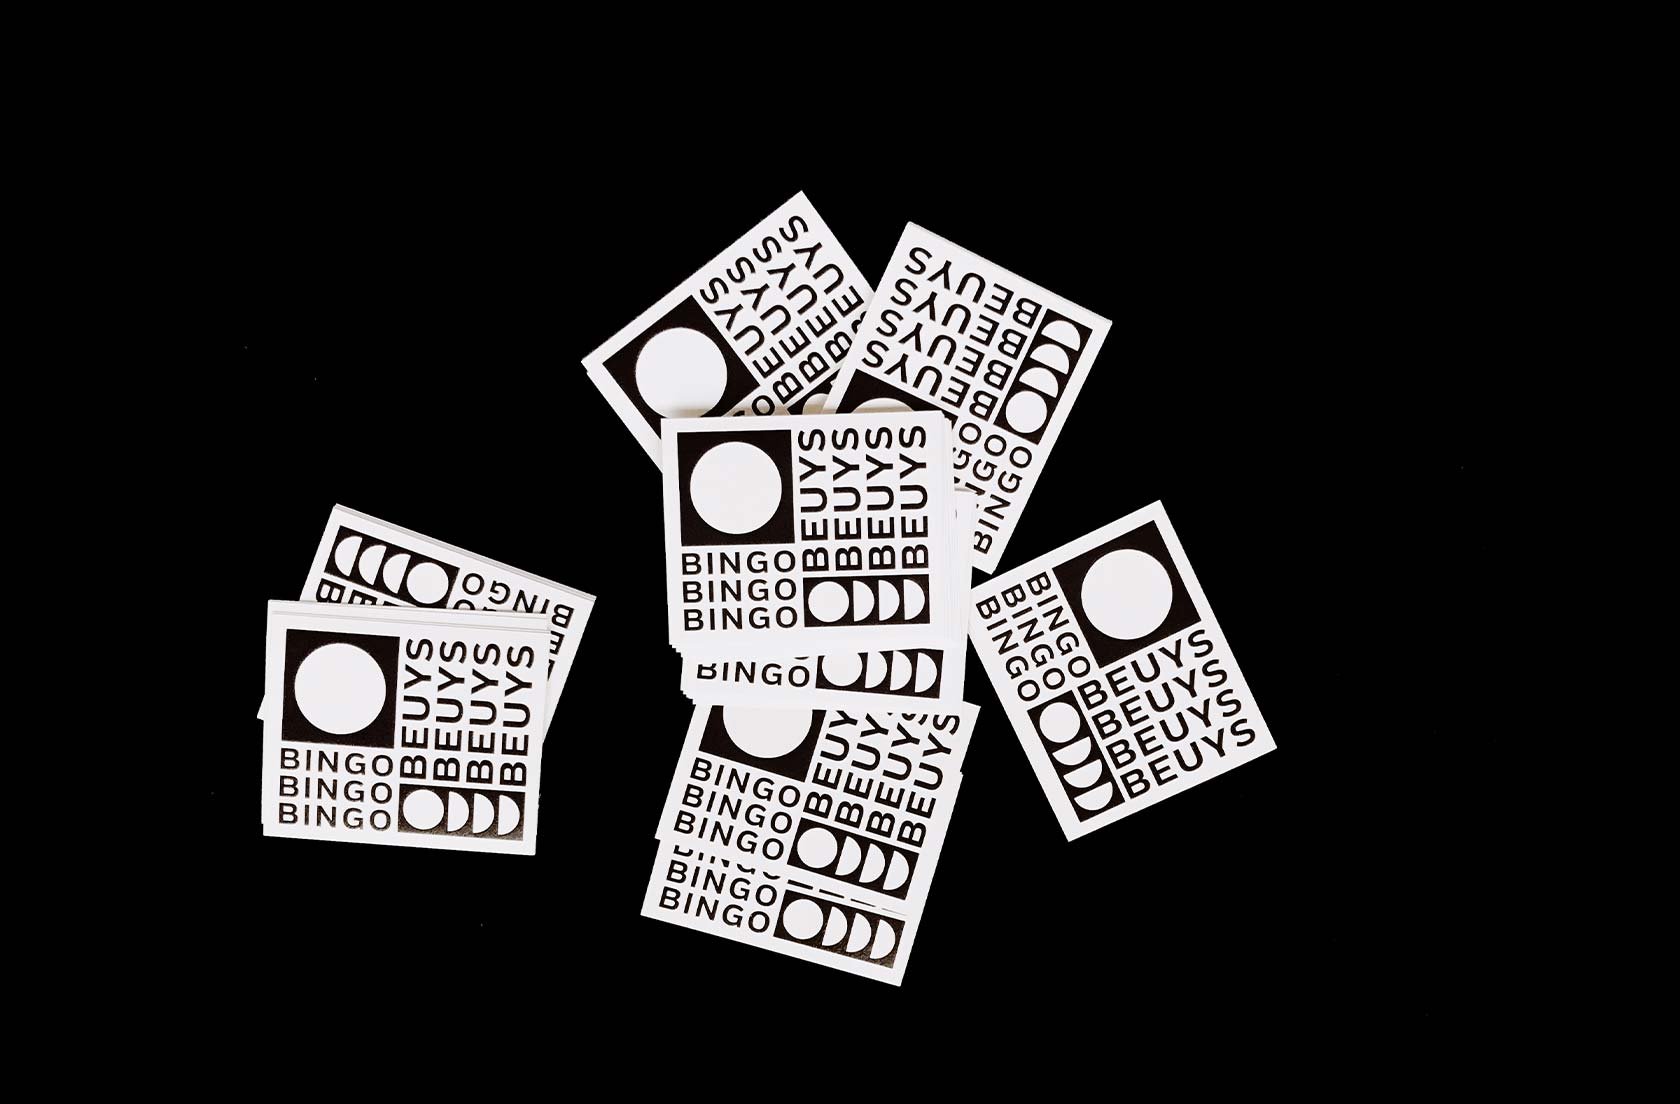 Bingo-Beuys-Branding-Bureau-Mitte-Designagentur-6.jpg